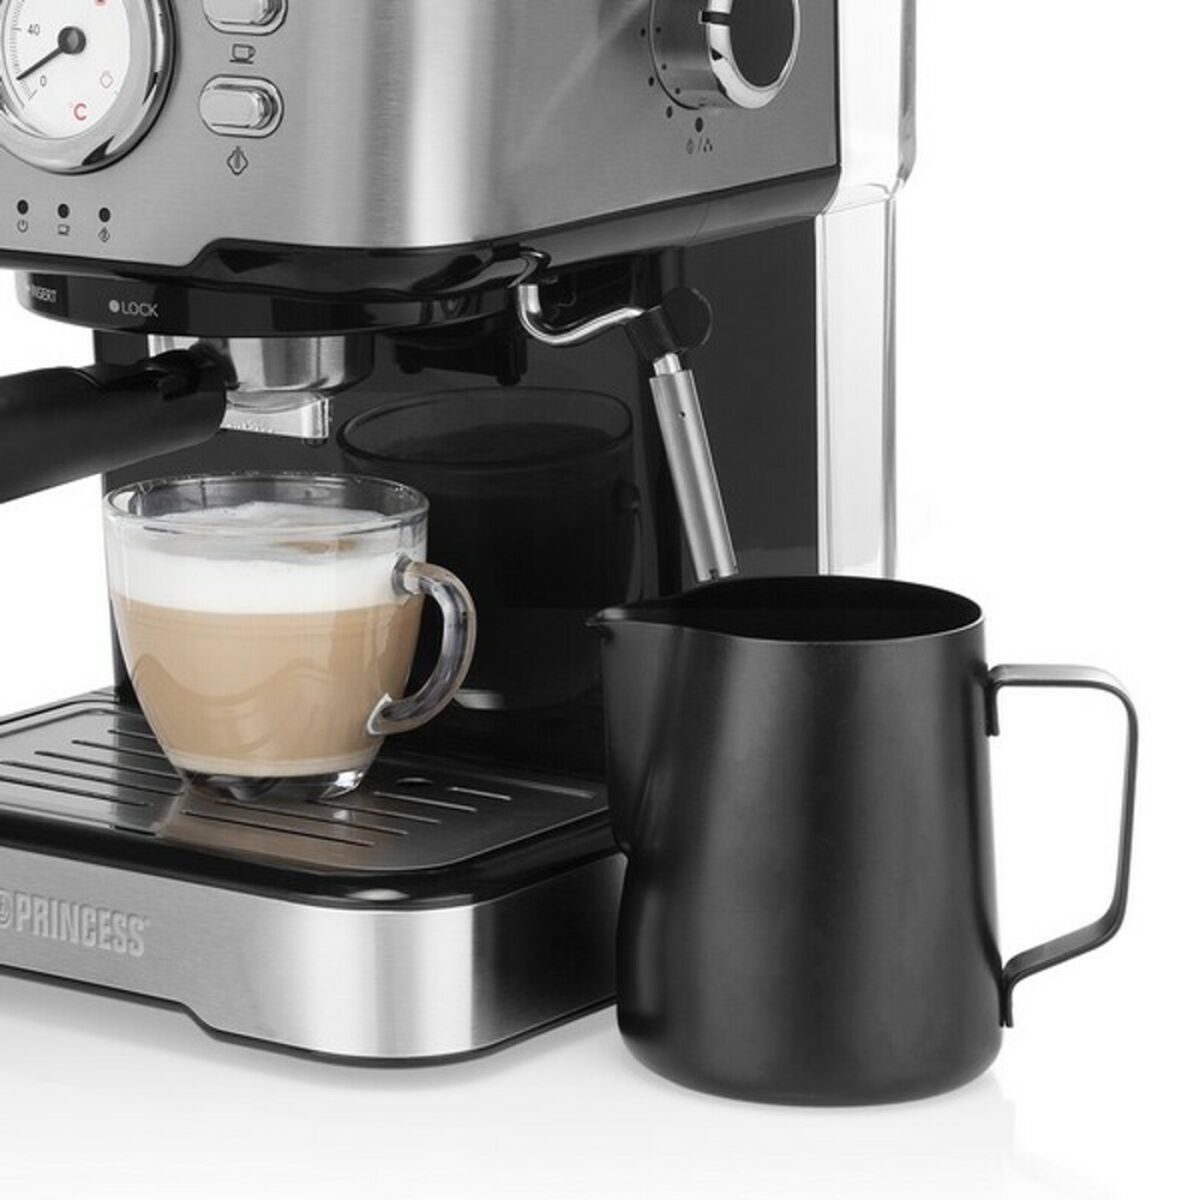 Express Manual Coffee Machine Princess 01.249412.01.001 1,5 L 1100W